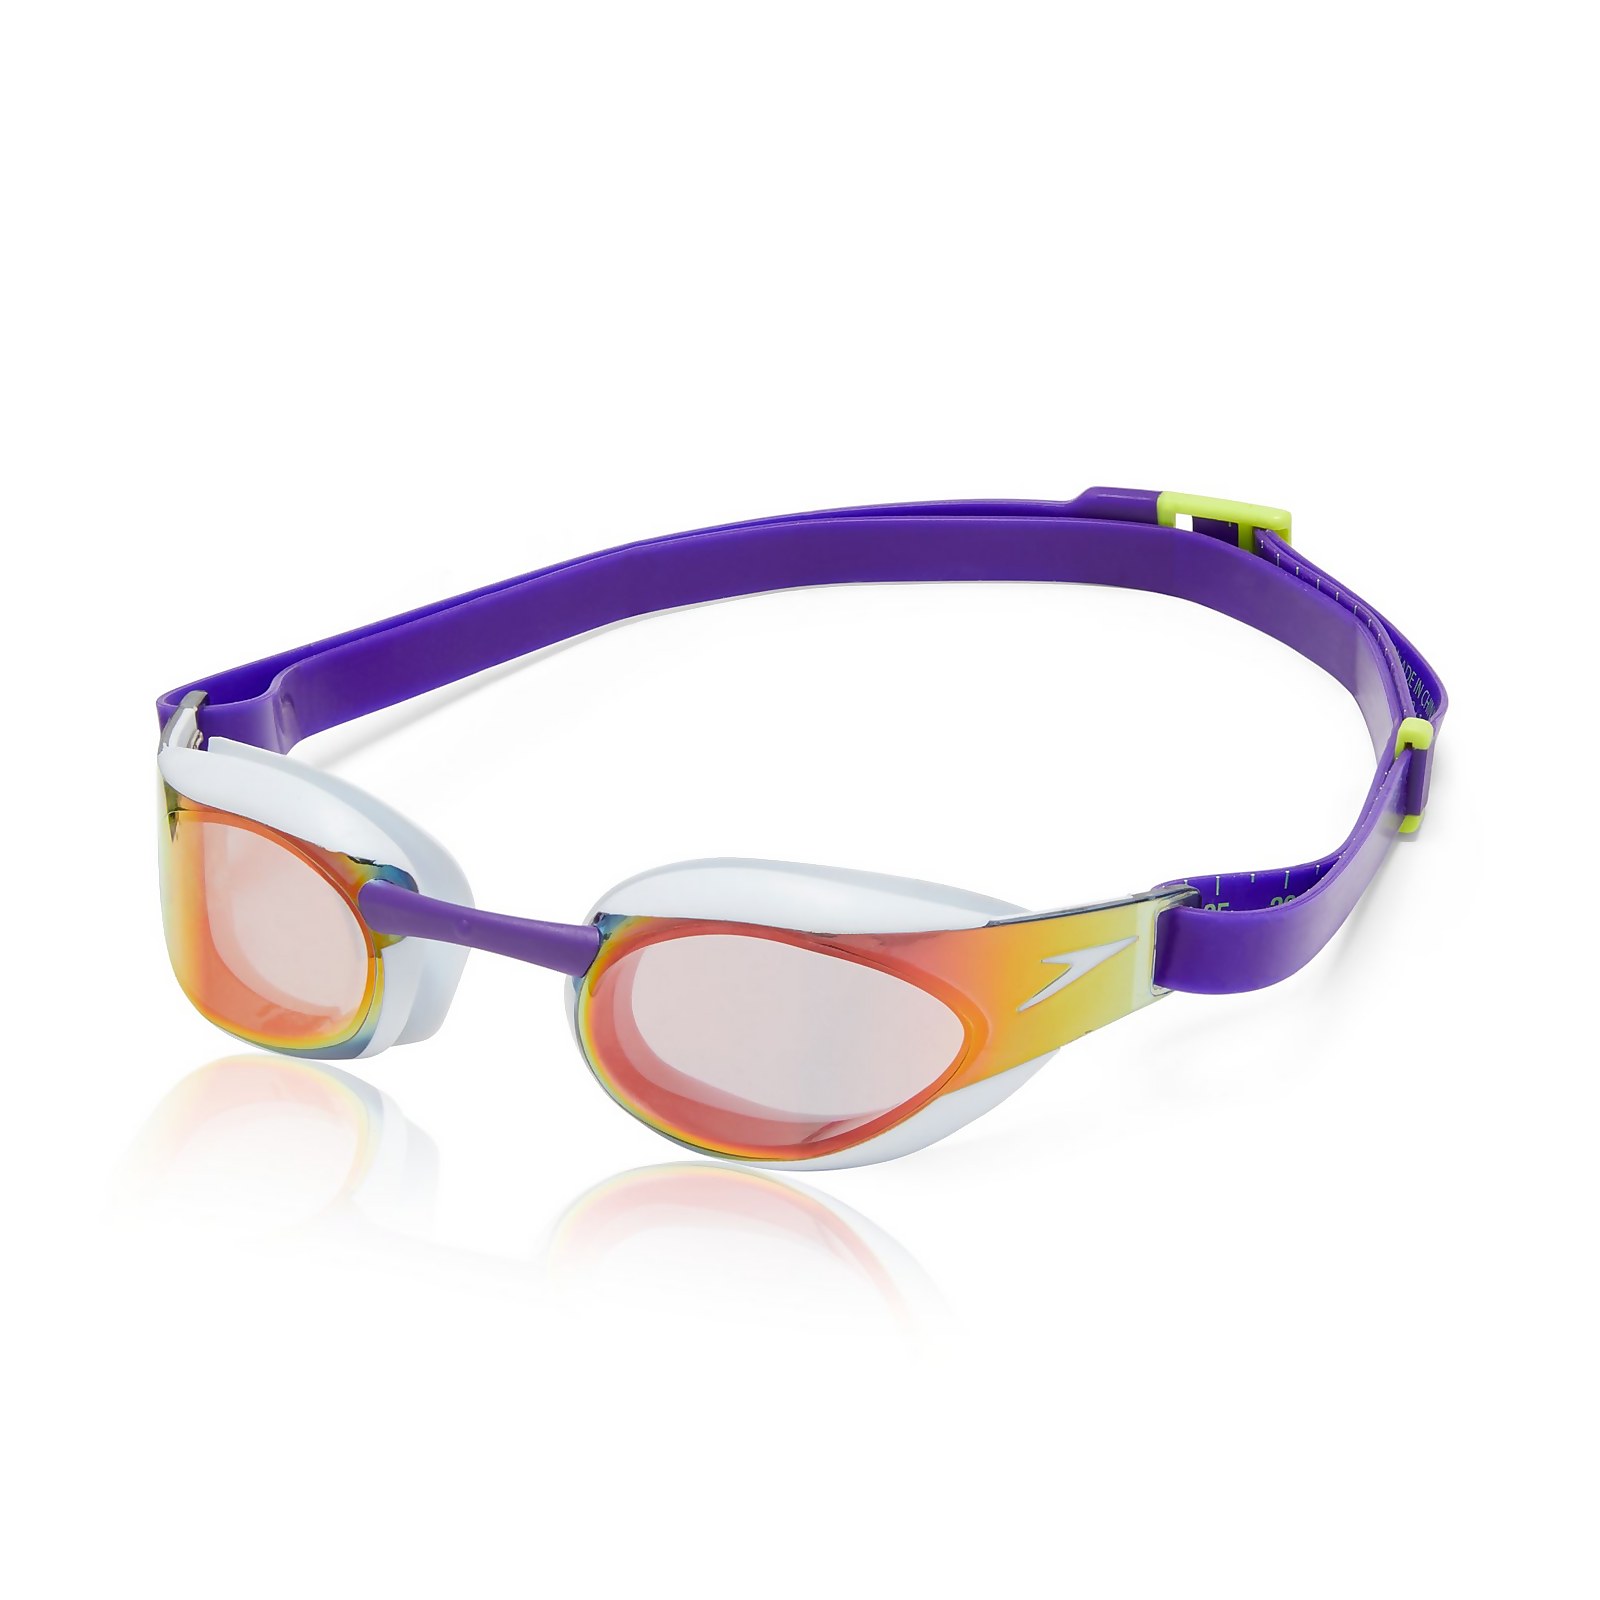 Speedo  Fastskin3 Elite Mirrored Goggle - One Size    : Purple